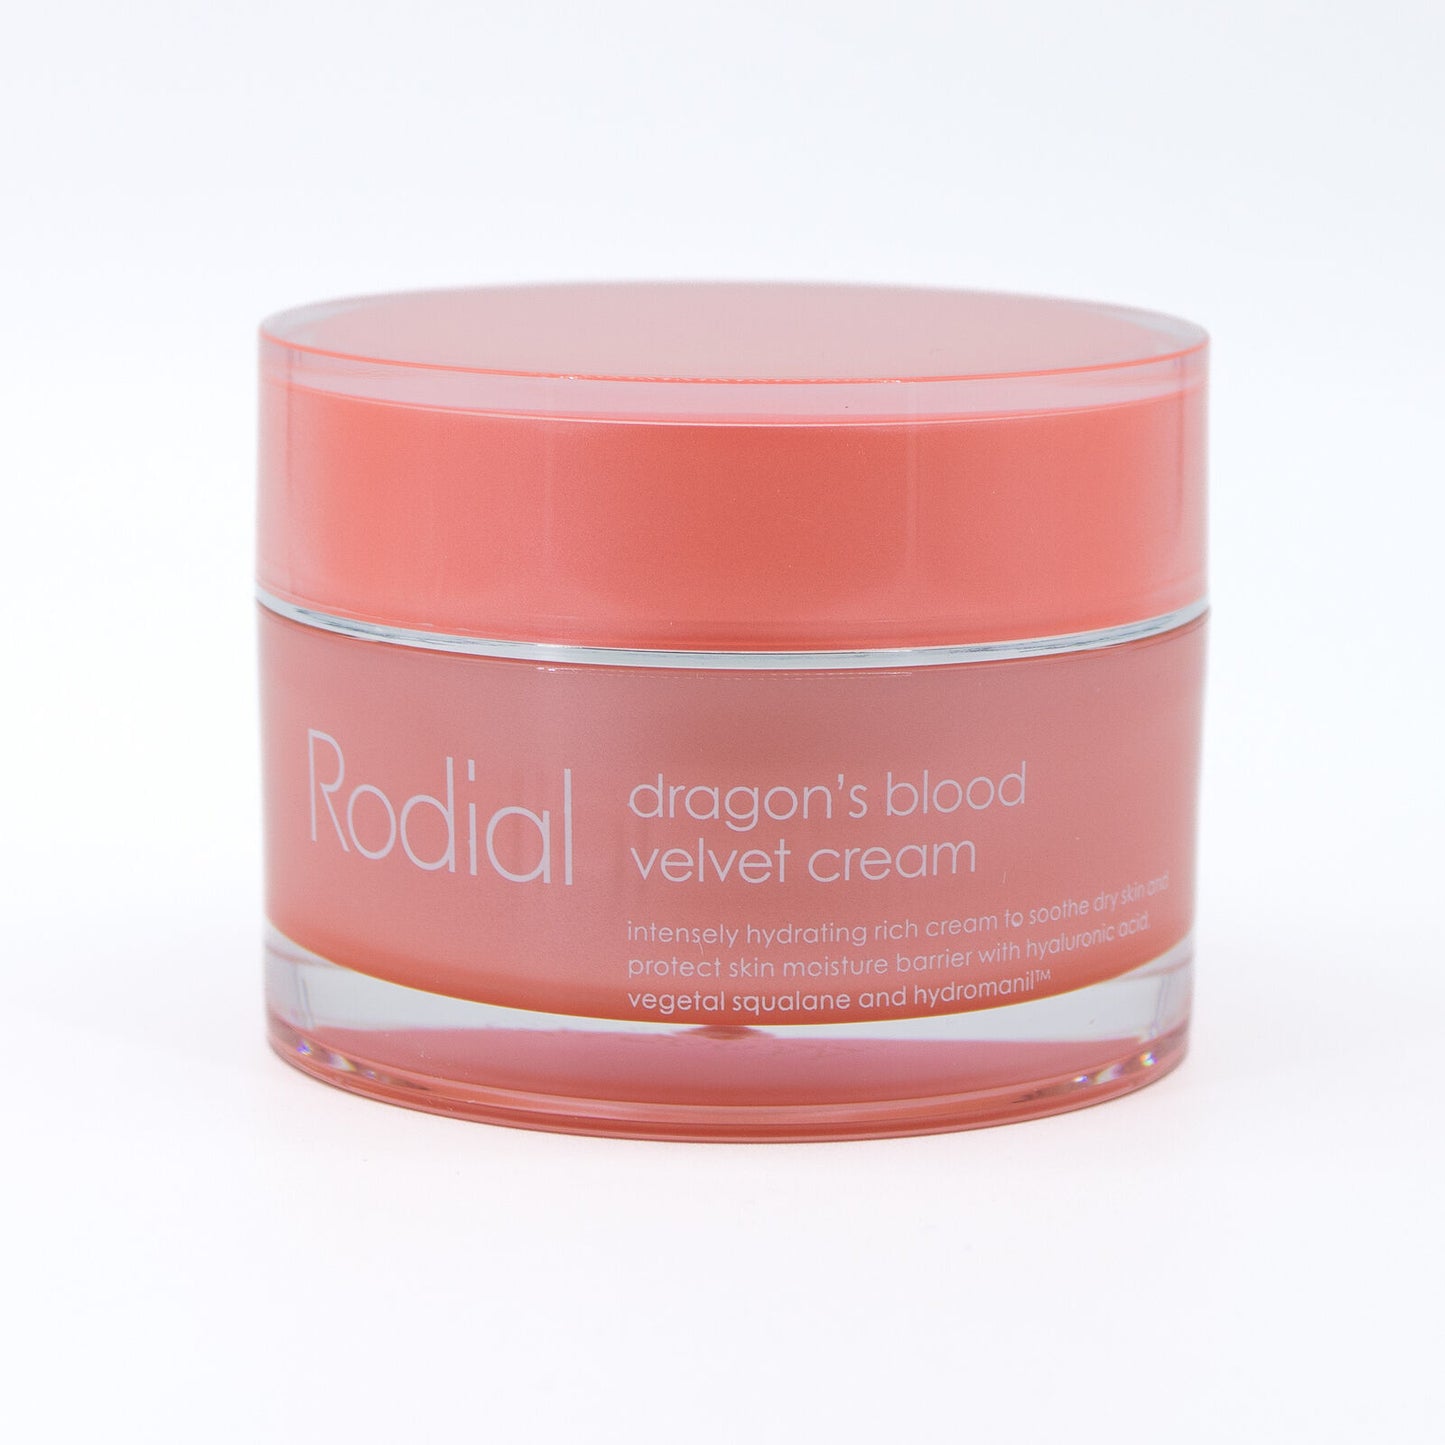 Rodial Dragon's Blood Velvet Cream 1.7oz - Imperfect Box